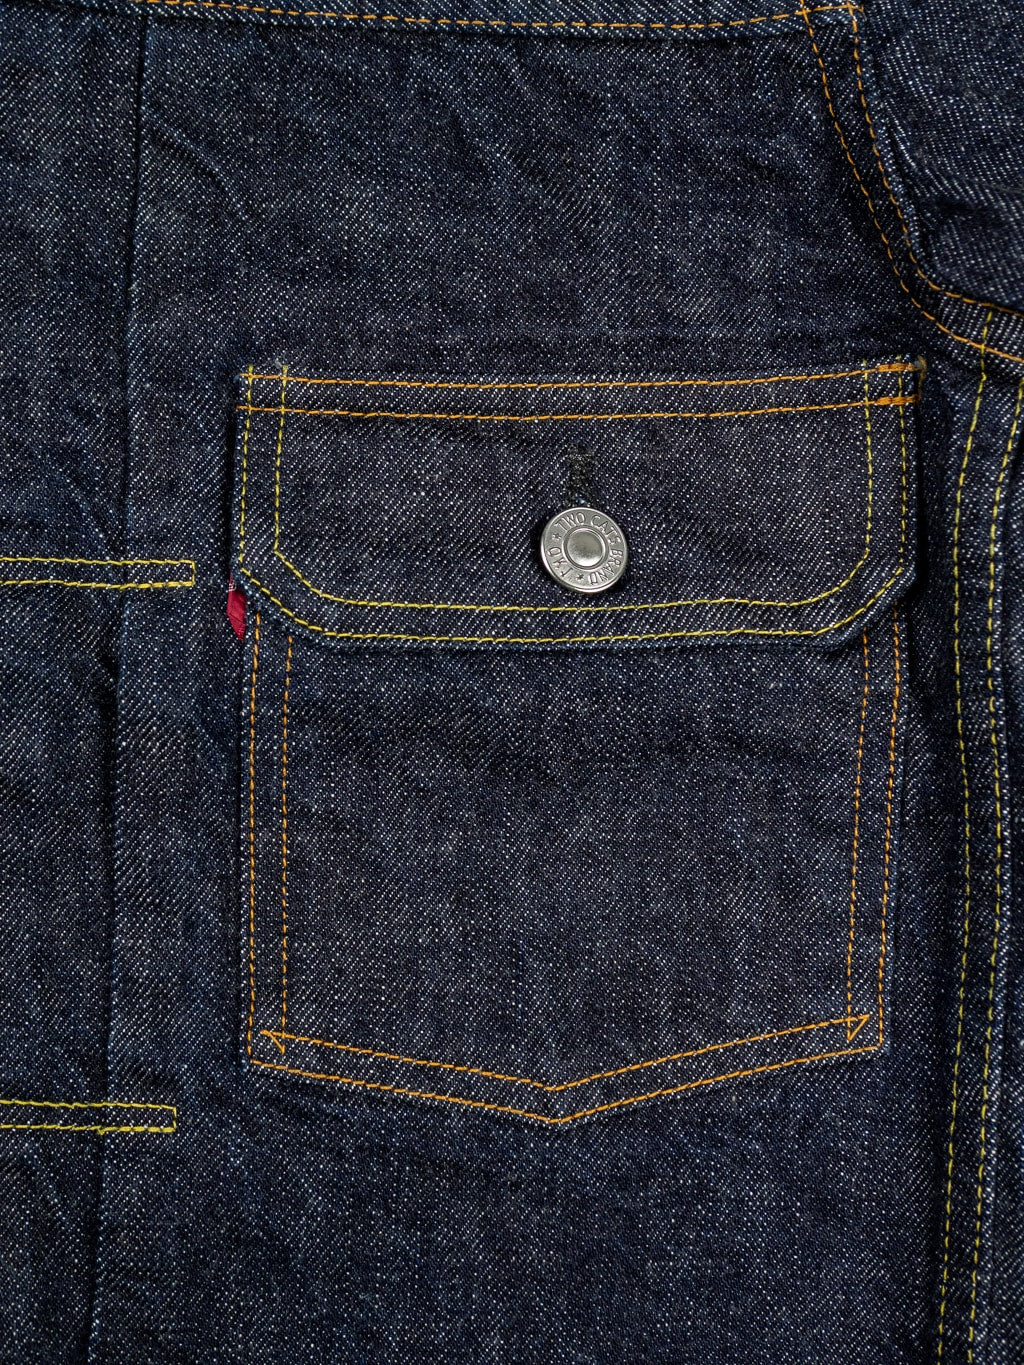 tcb 50 type2 denim jacket pocket closeup